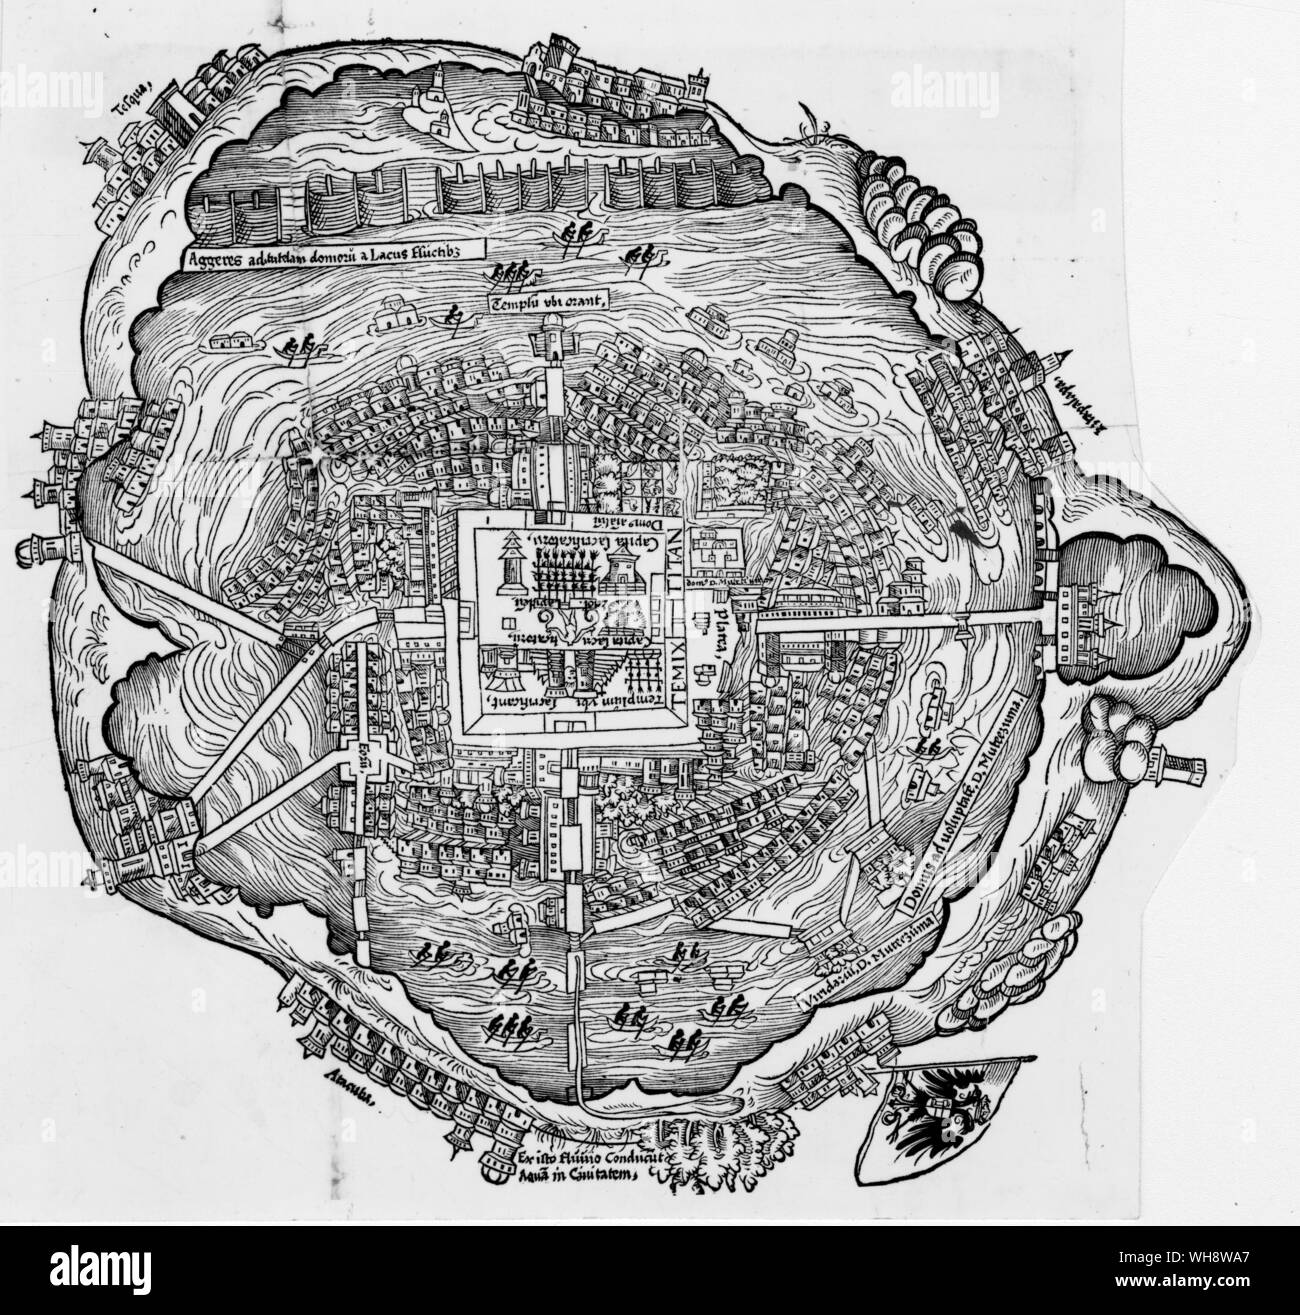 plan de tenochtitlan